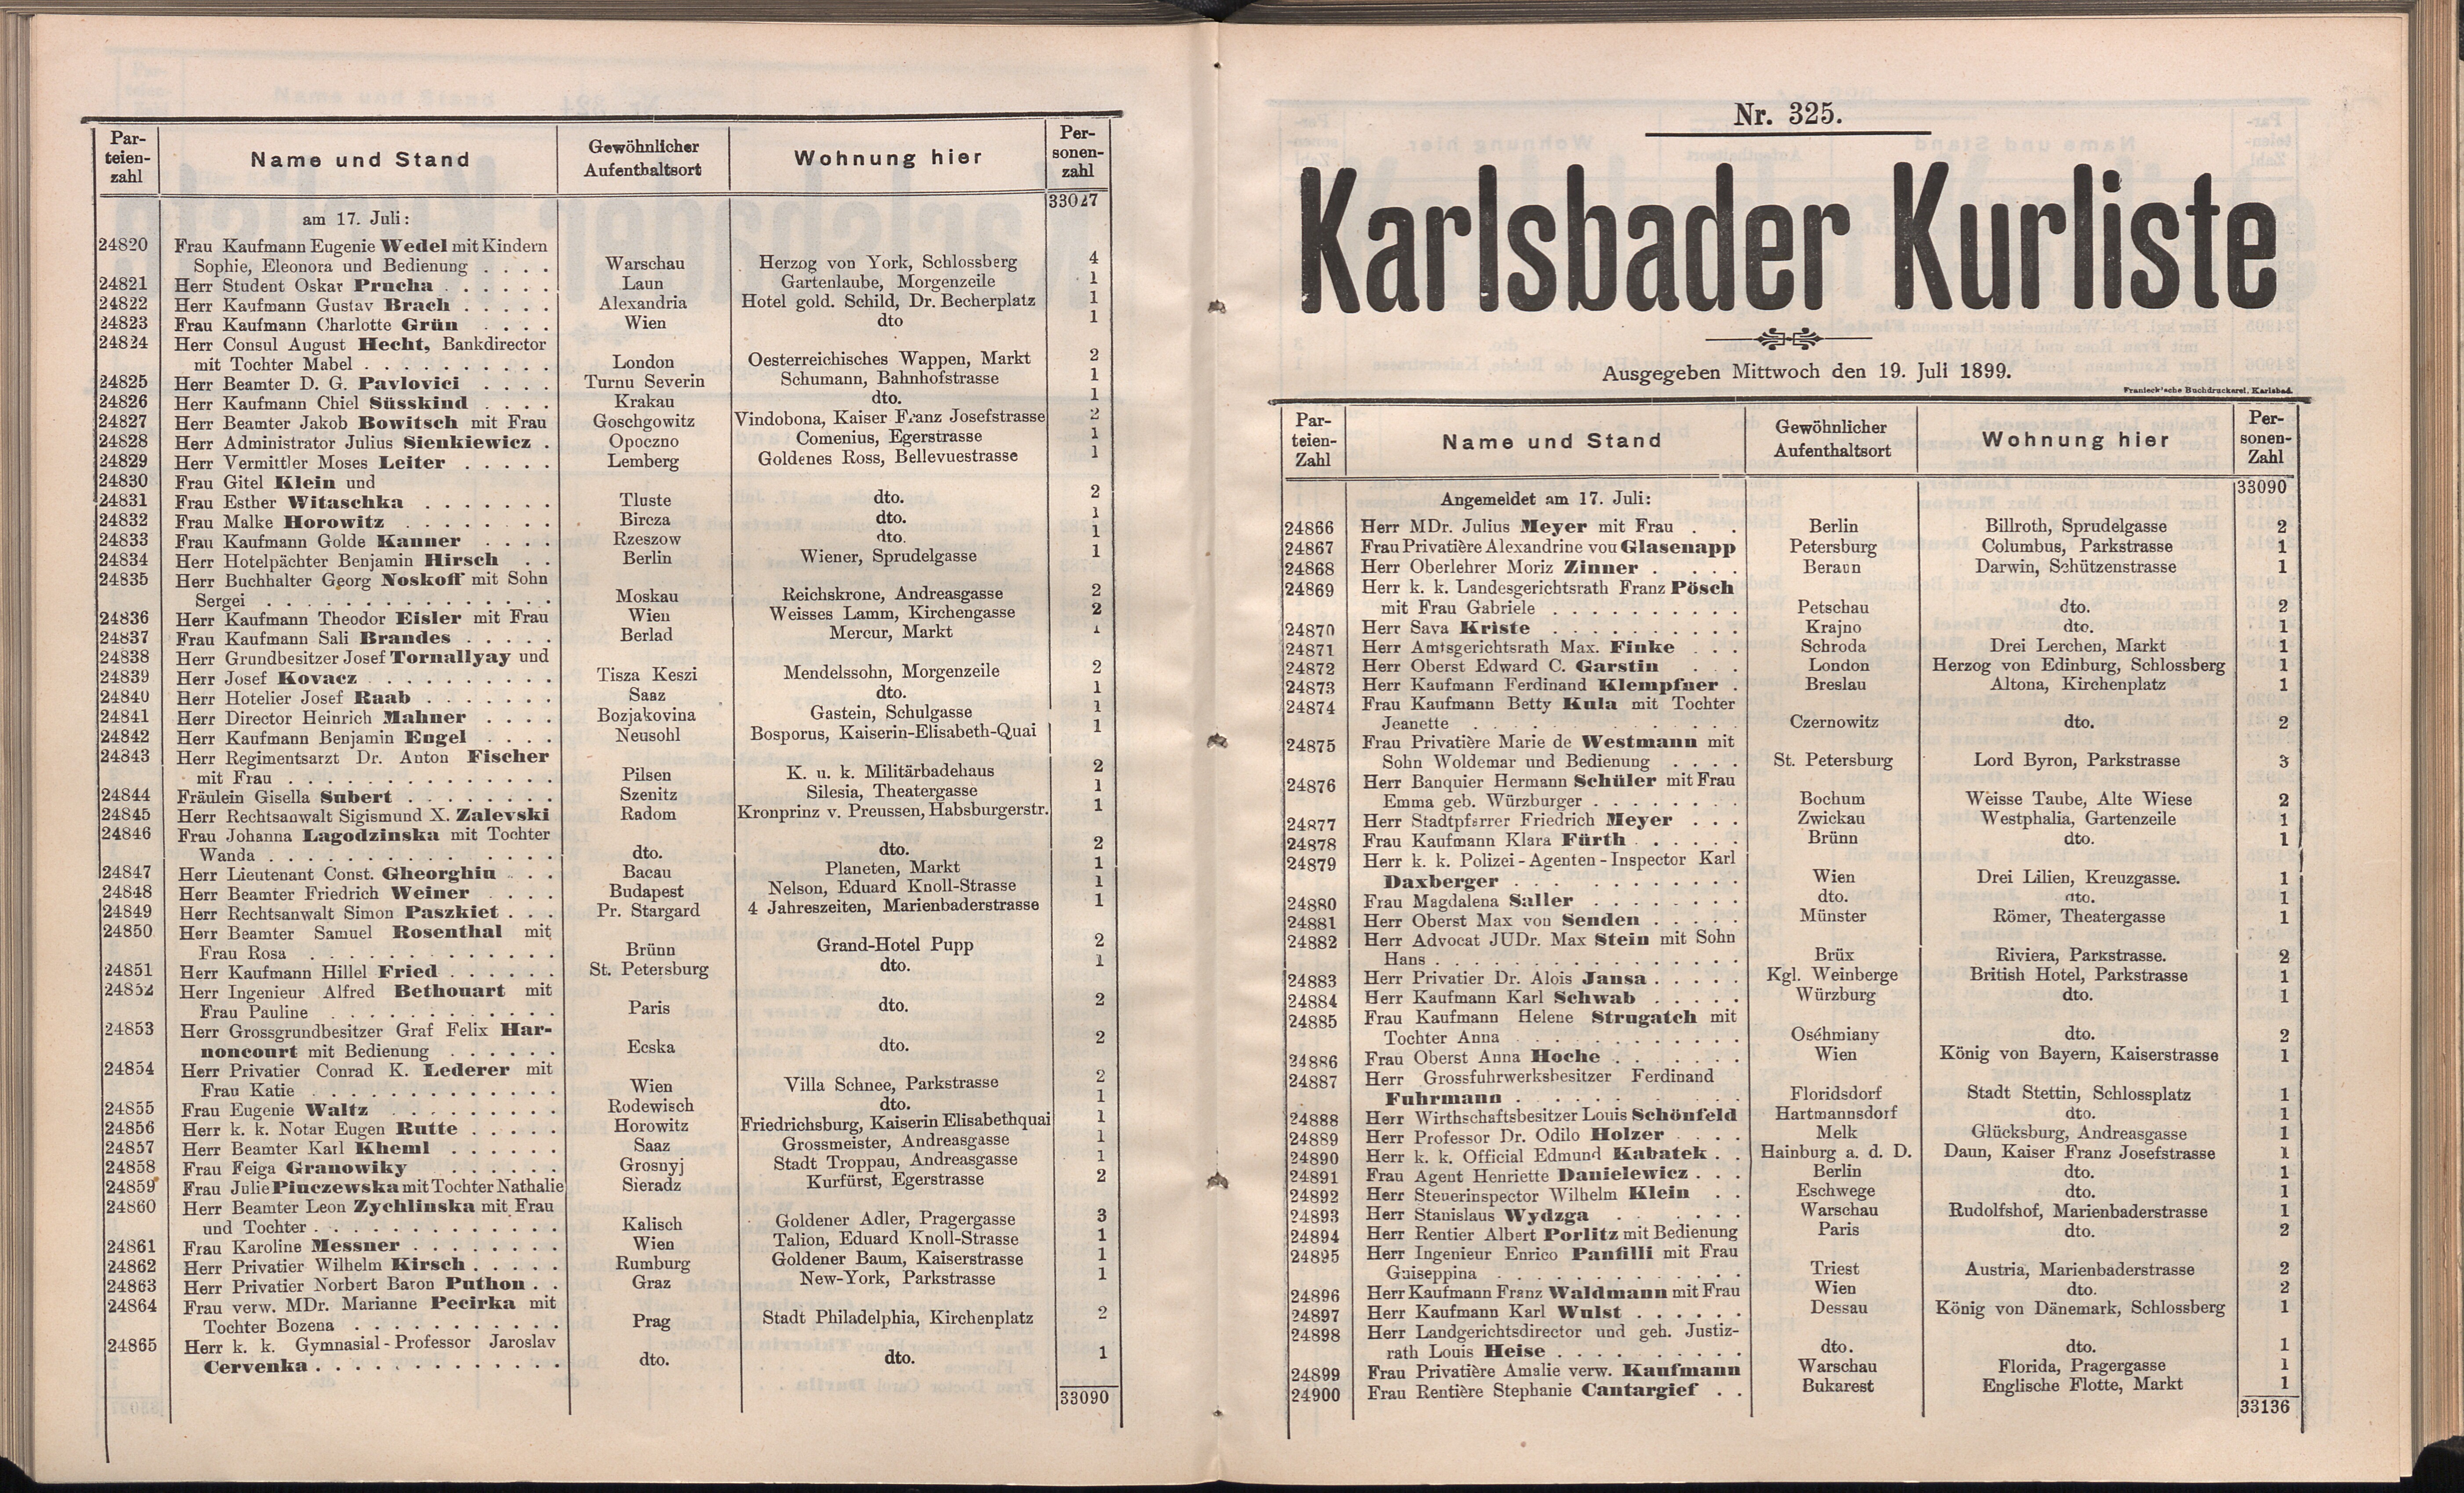 343. soap-kv_knihovna_karlsbader-kurliste-1899_3440